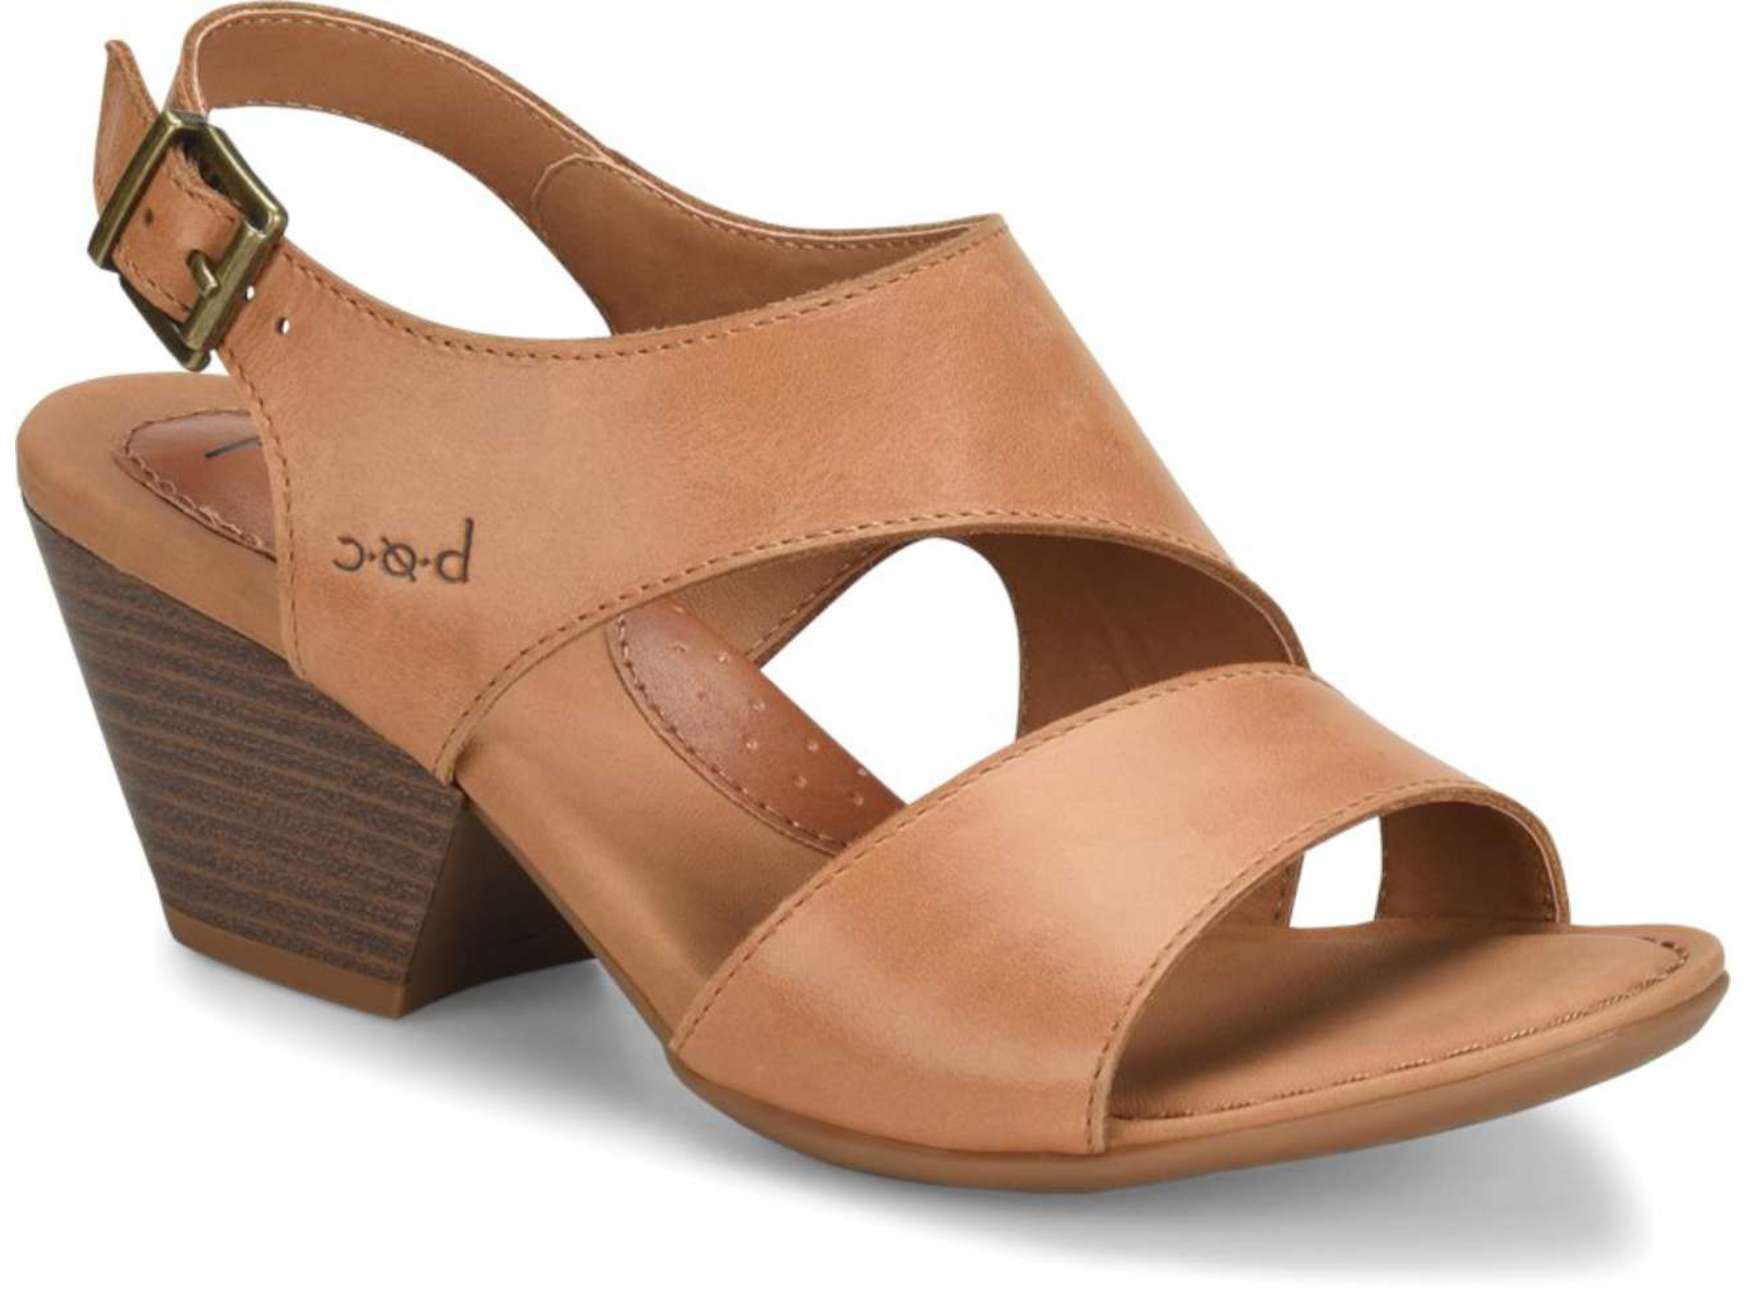 boc sandals canada